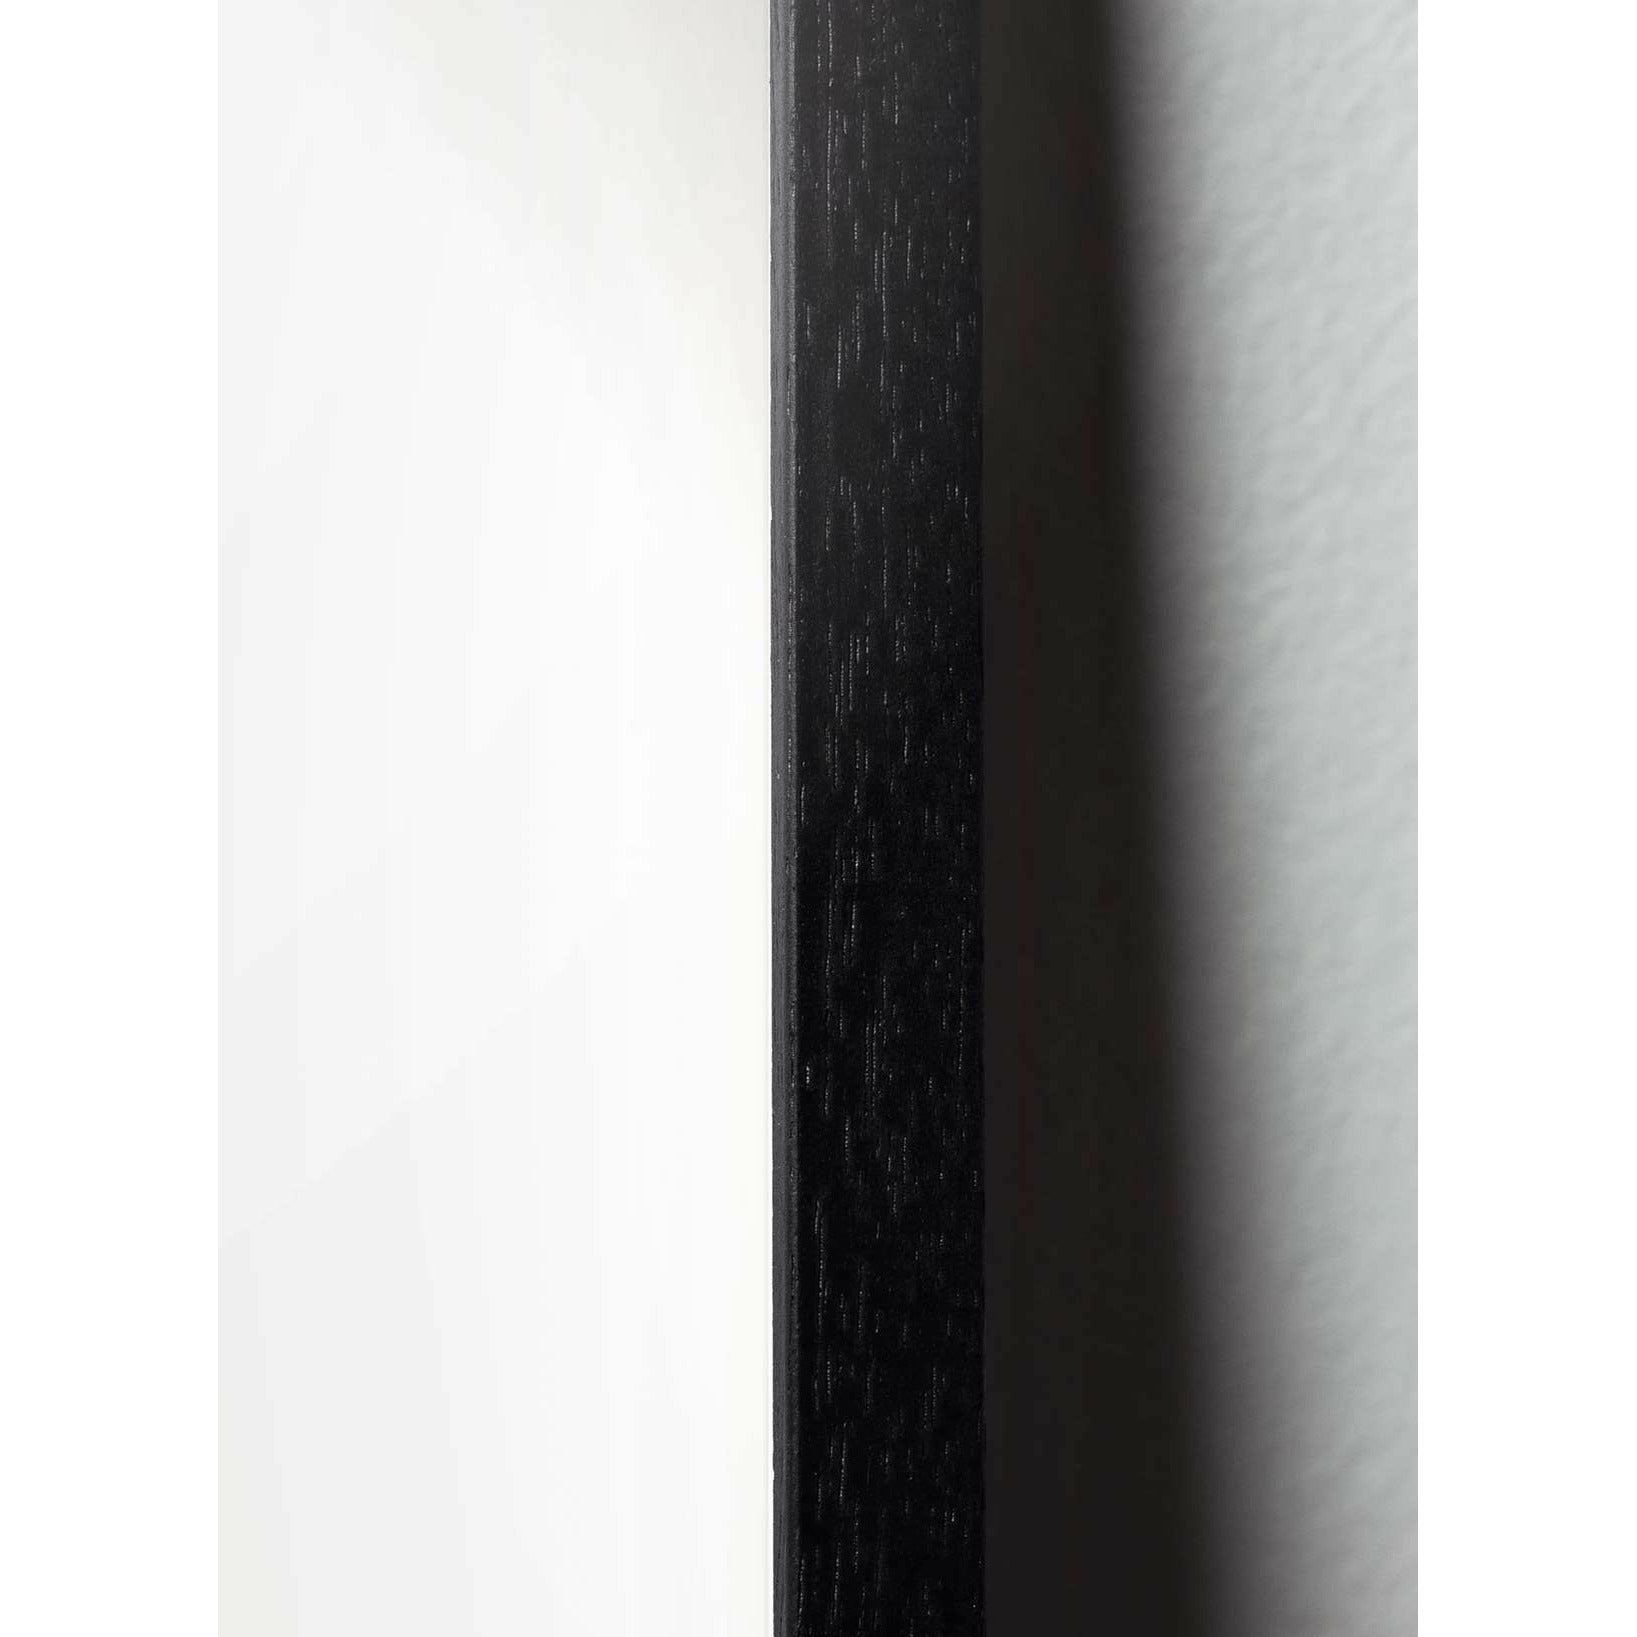 Brainchild Släpp klassisk affisch, ram i svart -målat trä 70x100 cm, mörkblå bakgrund